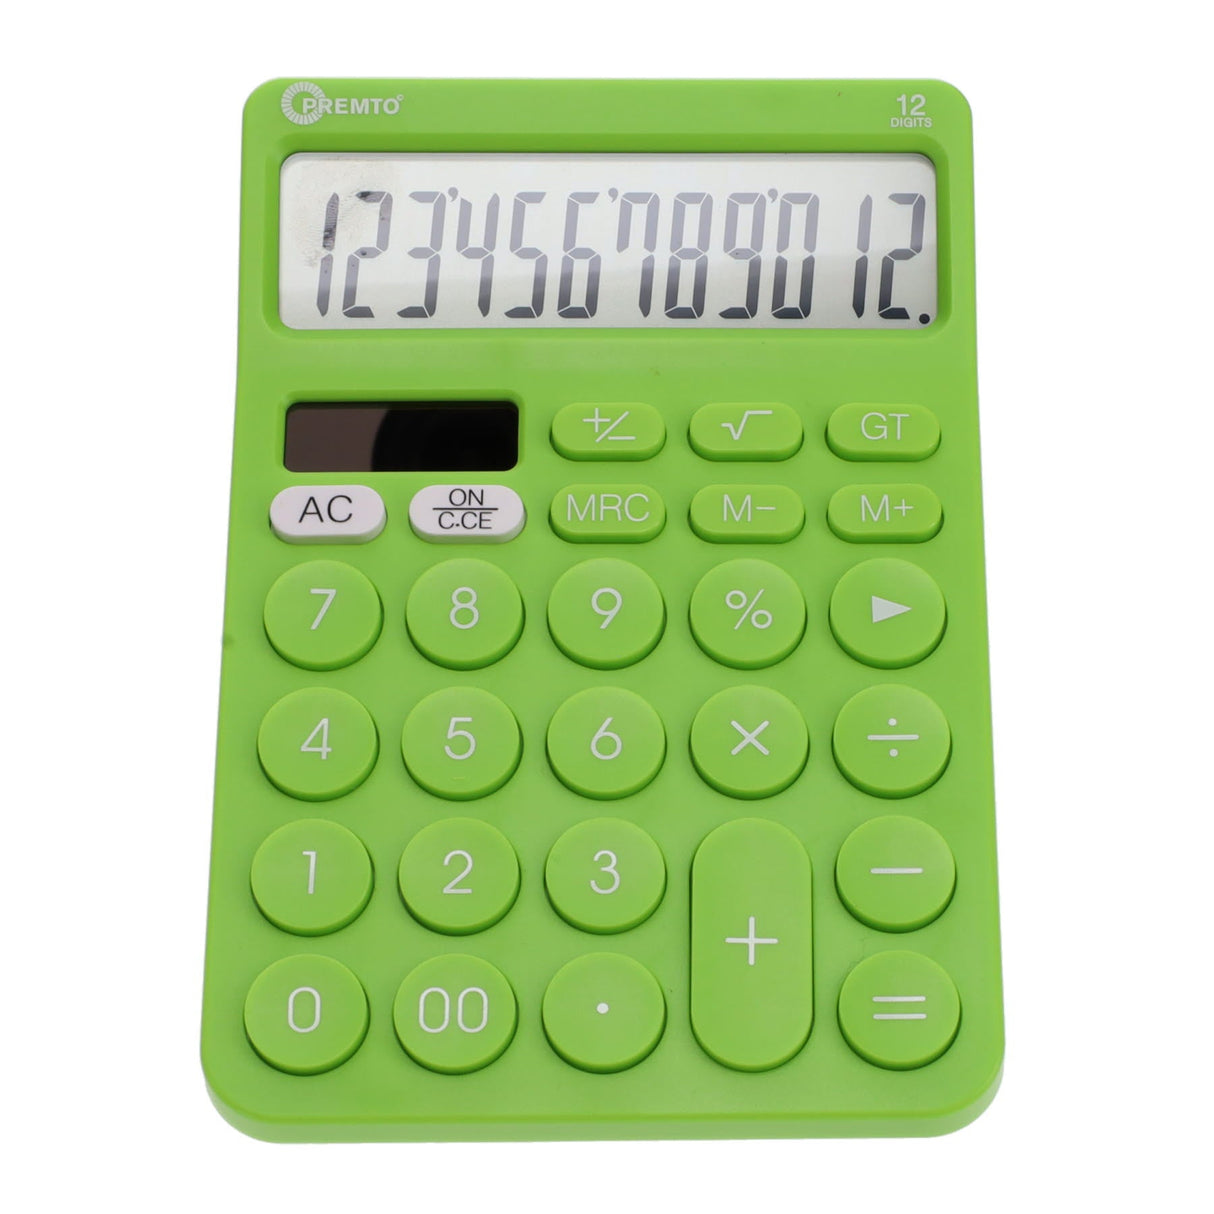 Premto Desktop Calculator Maths Essentials - Caterpillar Green-Calculators-Premto|StationeryShop.co.uk